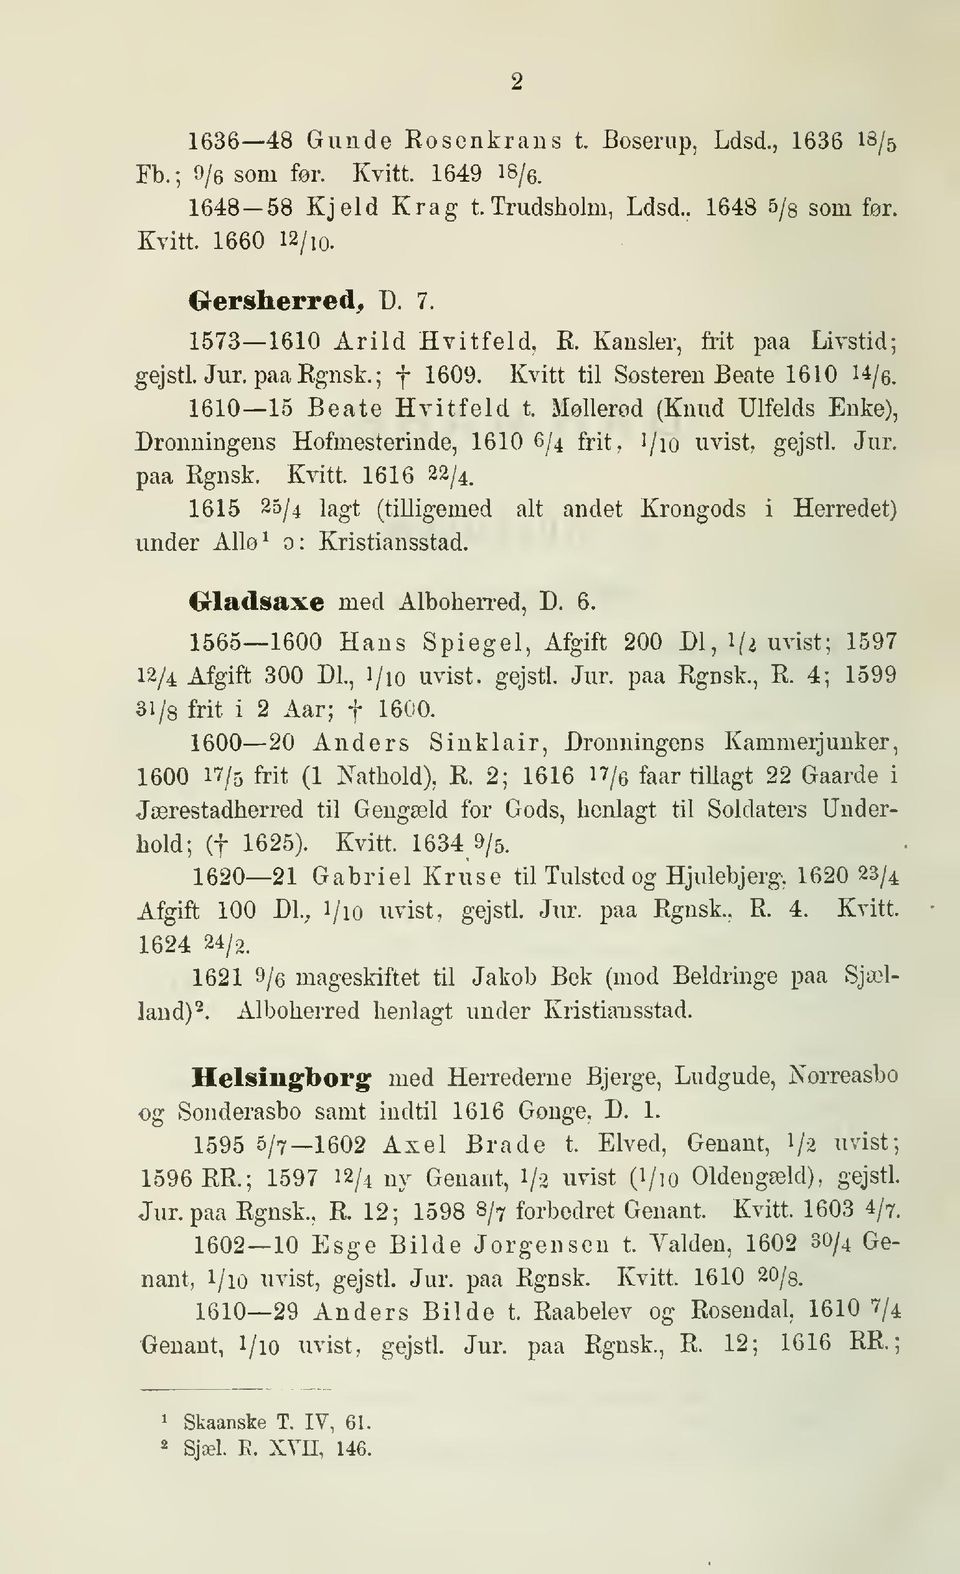 Møllerød (Knud Ulfeids Enke), Dronningens Hofmesterinde, 1610 6/4 frit, 1/10 uvist, gejstl. Jur. paa Rgnsk. Kvitt. 1616 22/4.